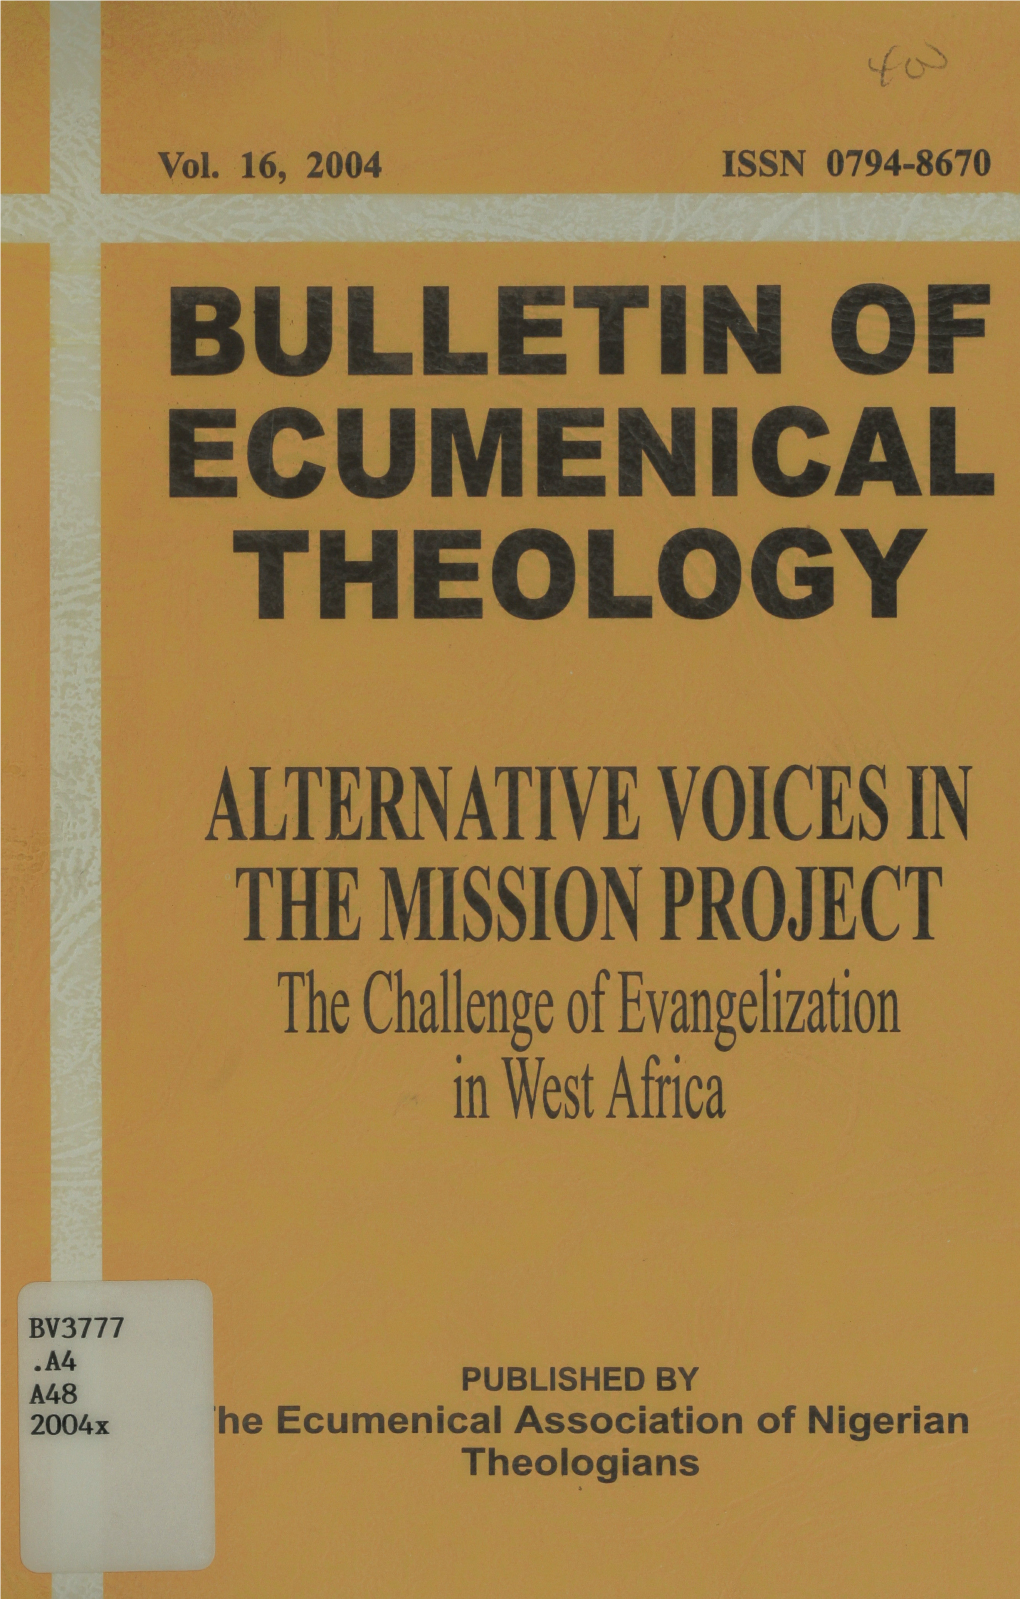 The Challenge of Evangelization in West Africa